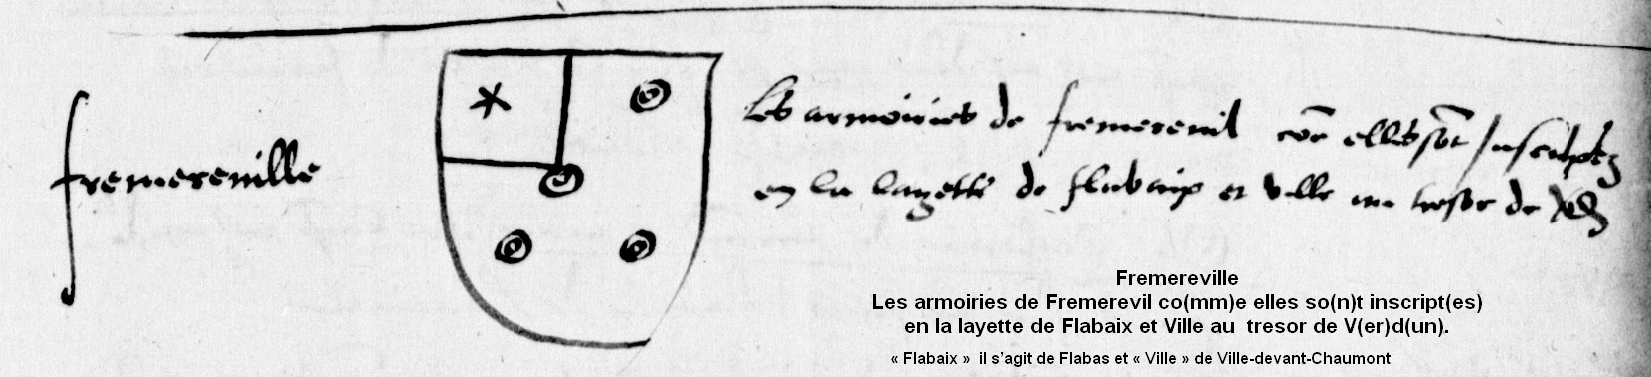 Blason de Frmerville en 1573 avec le texte de 1573